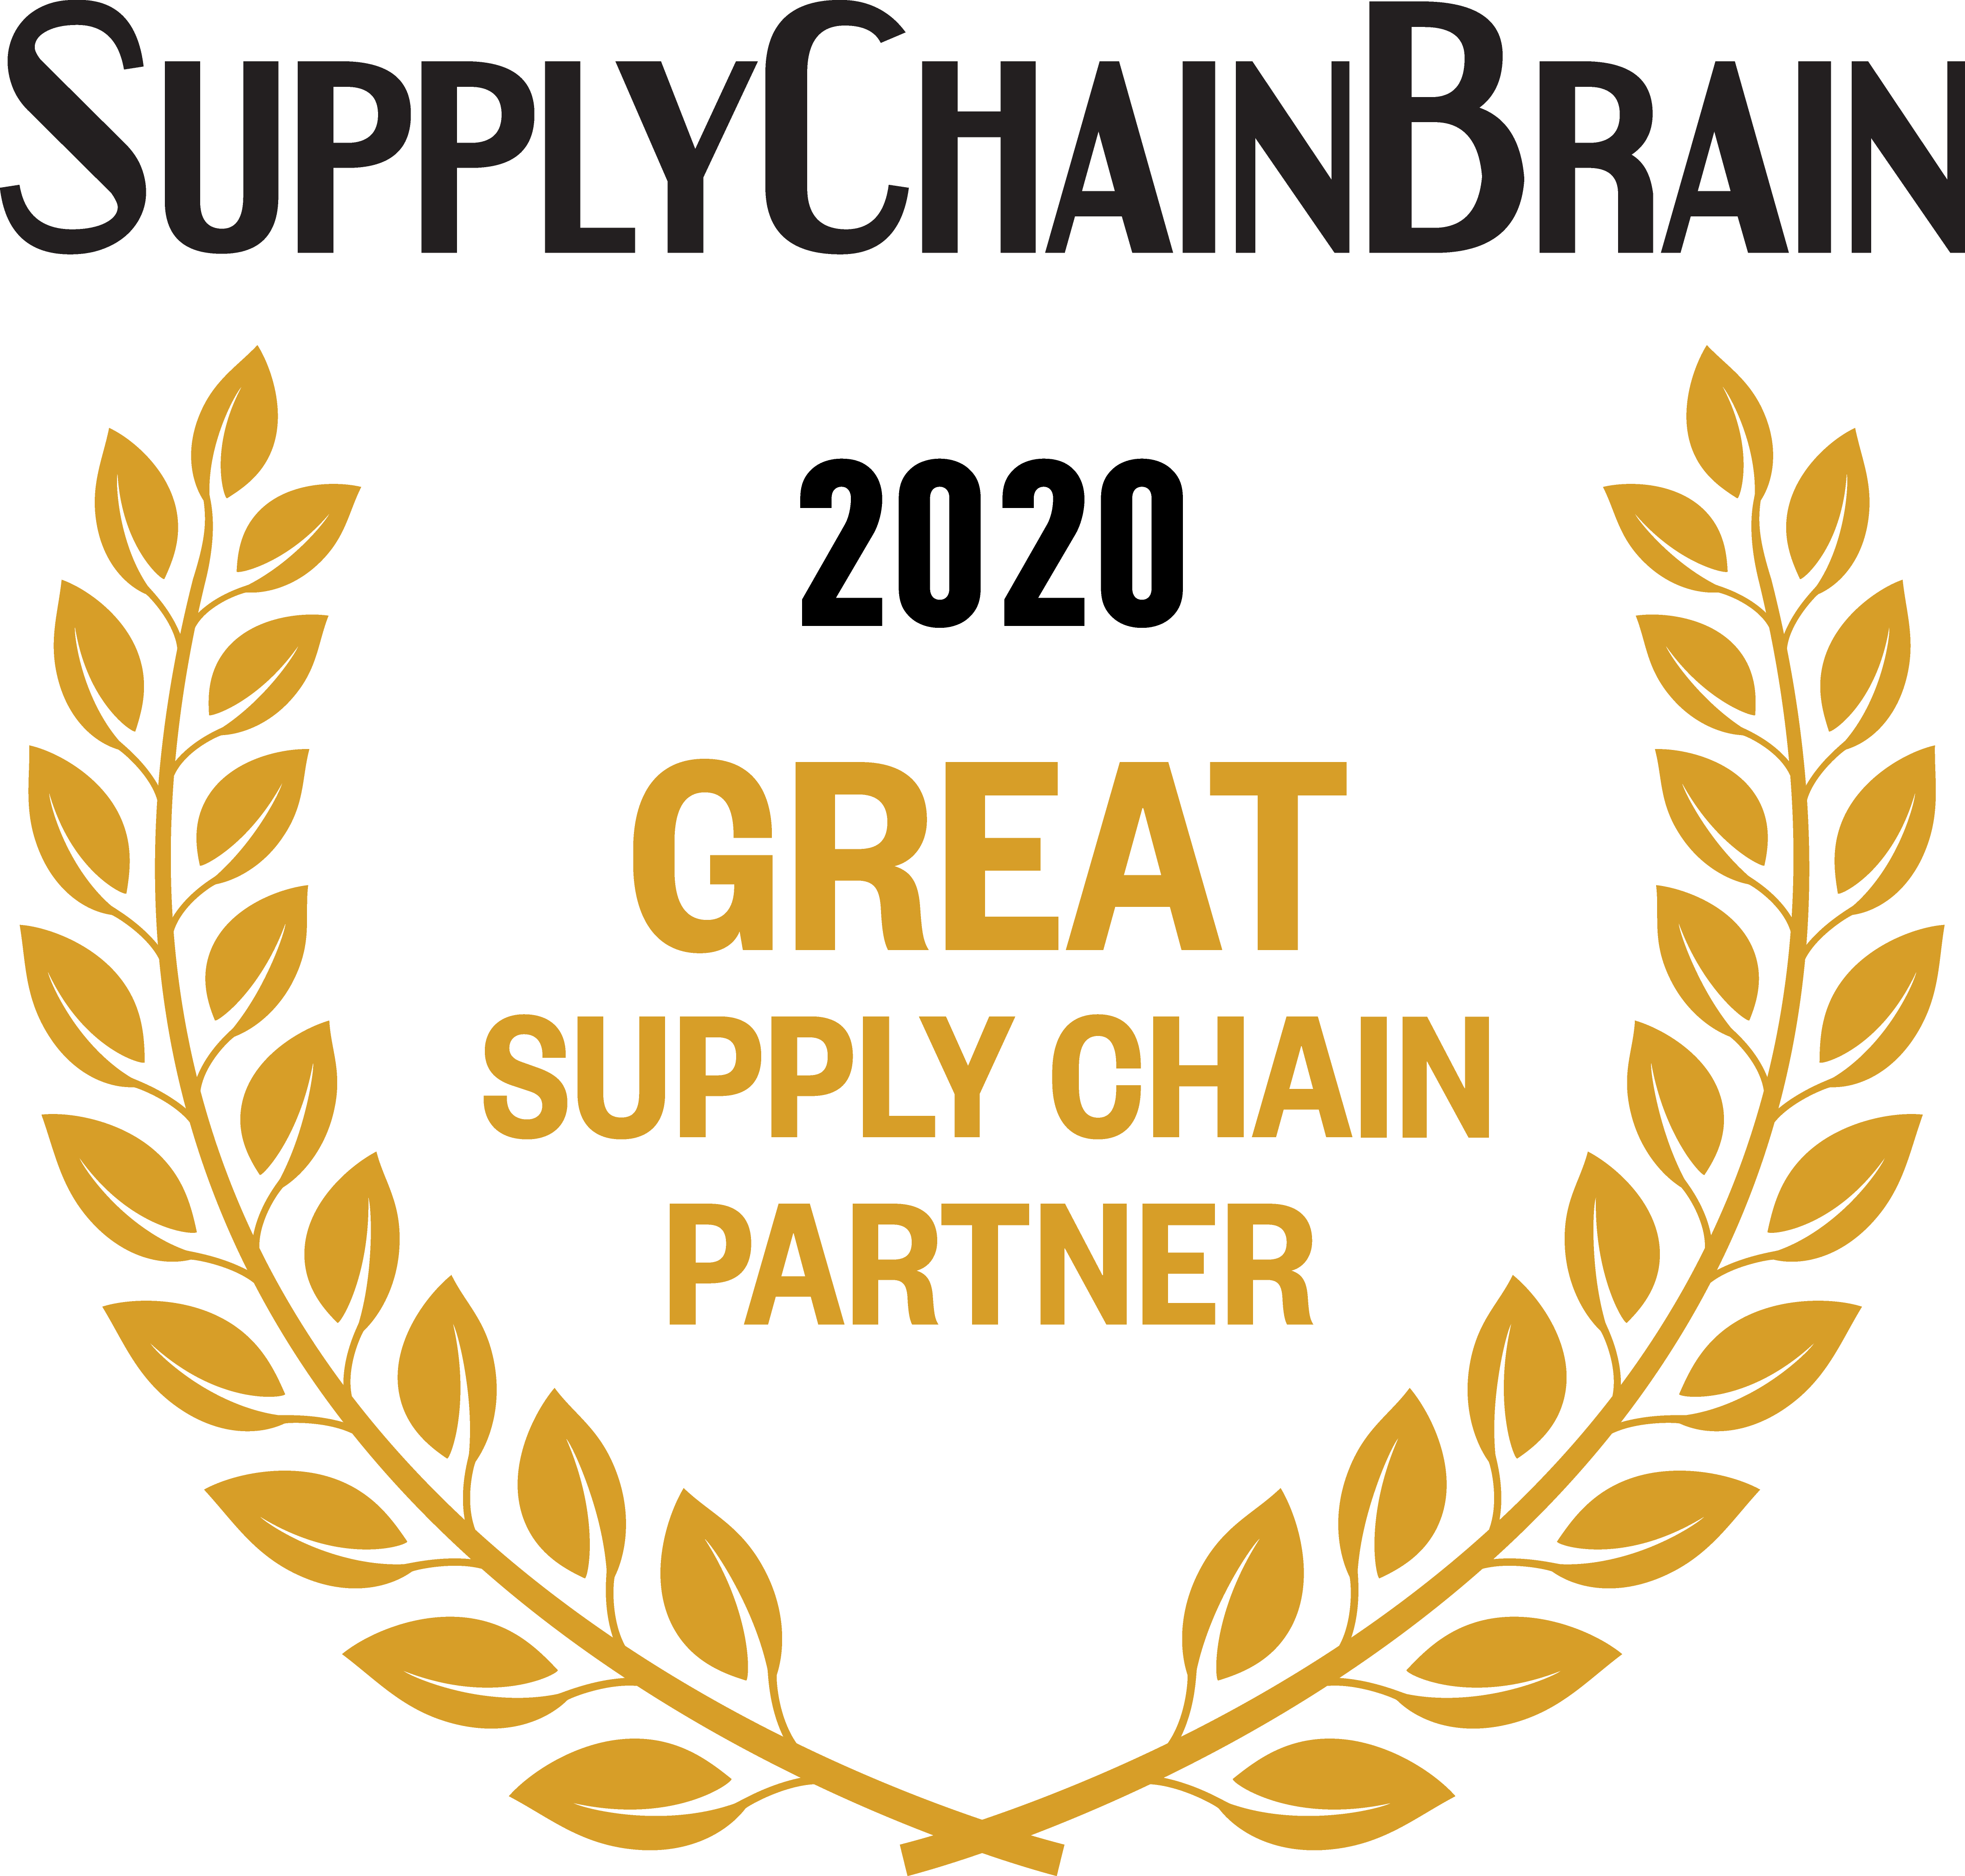 Great Supply Chain Partner 2020